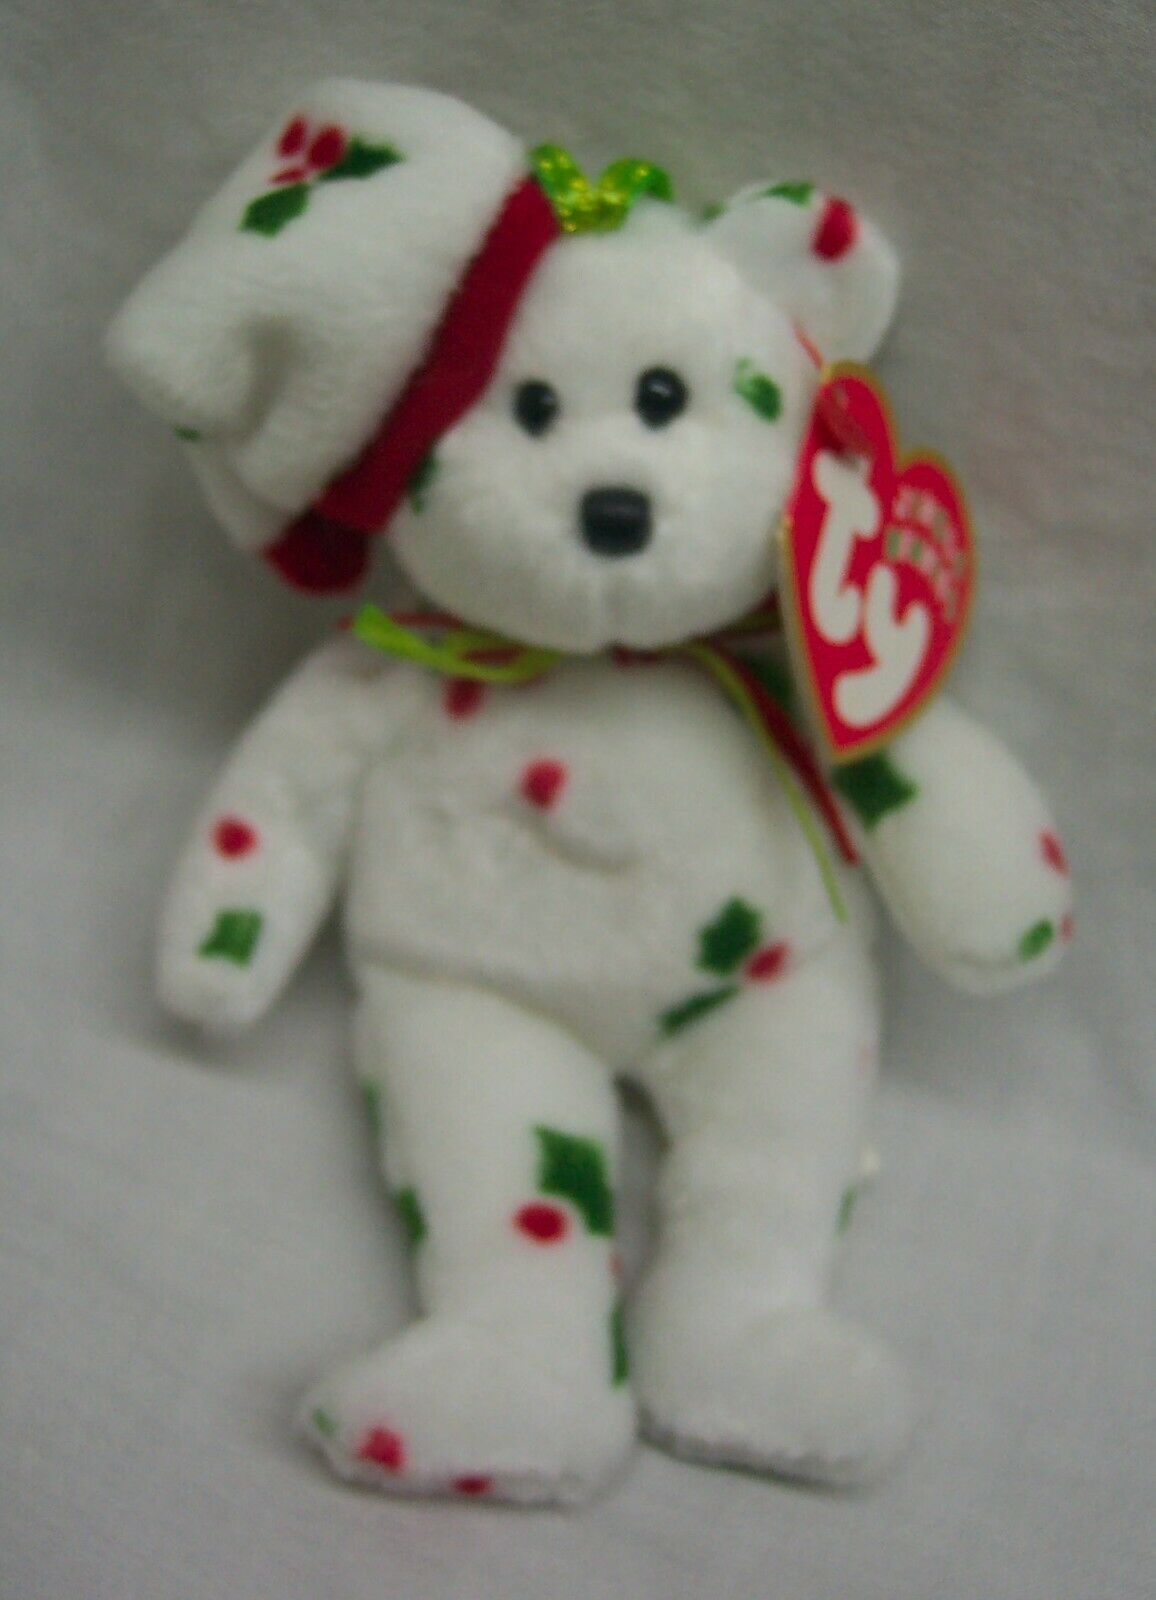 TY Jingle Beanies MINI 1998 HOLIDAY TEDDY BEAR ORNAMENT 5" STUFFED ANIMAL NEW - $14.85